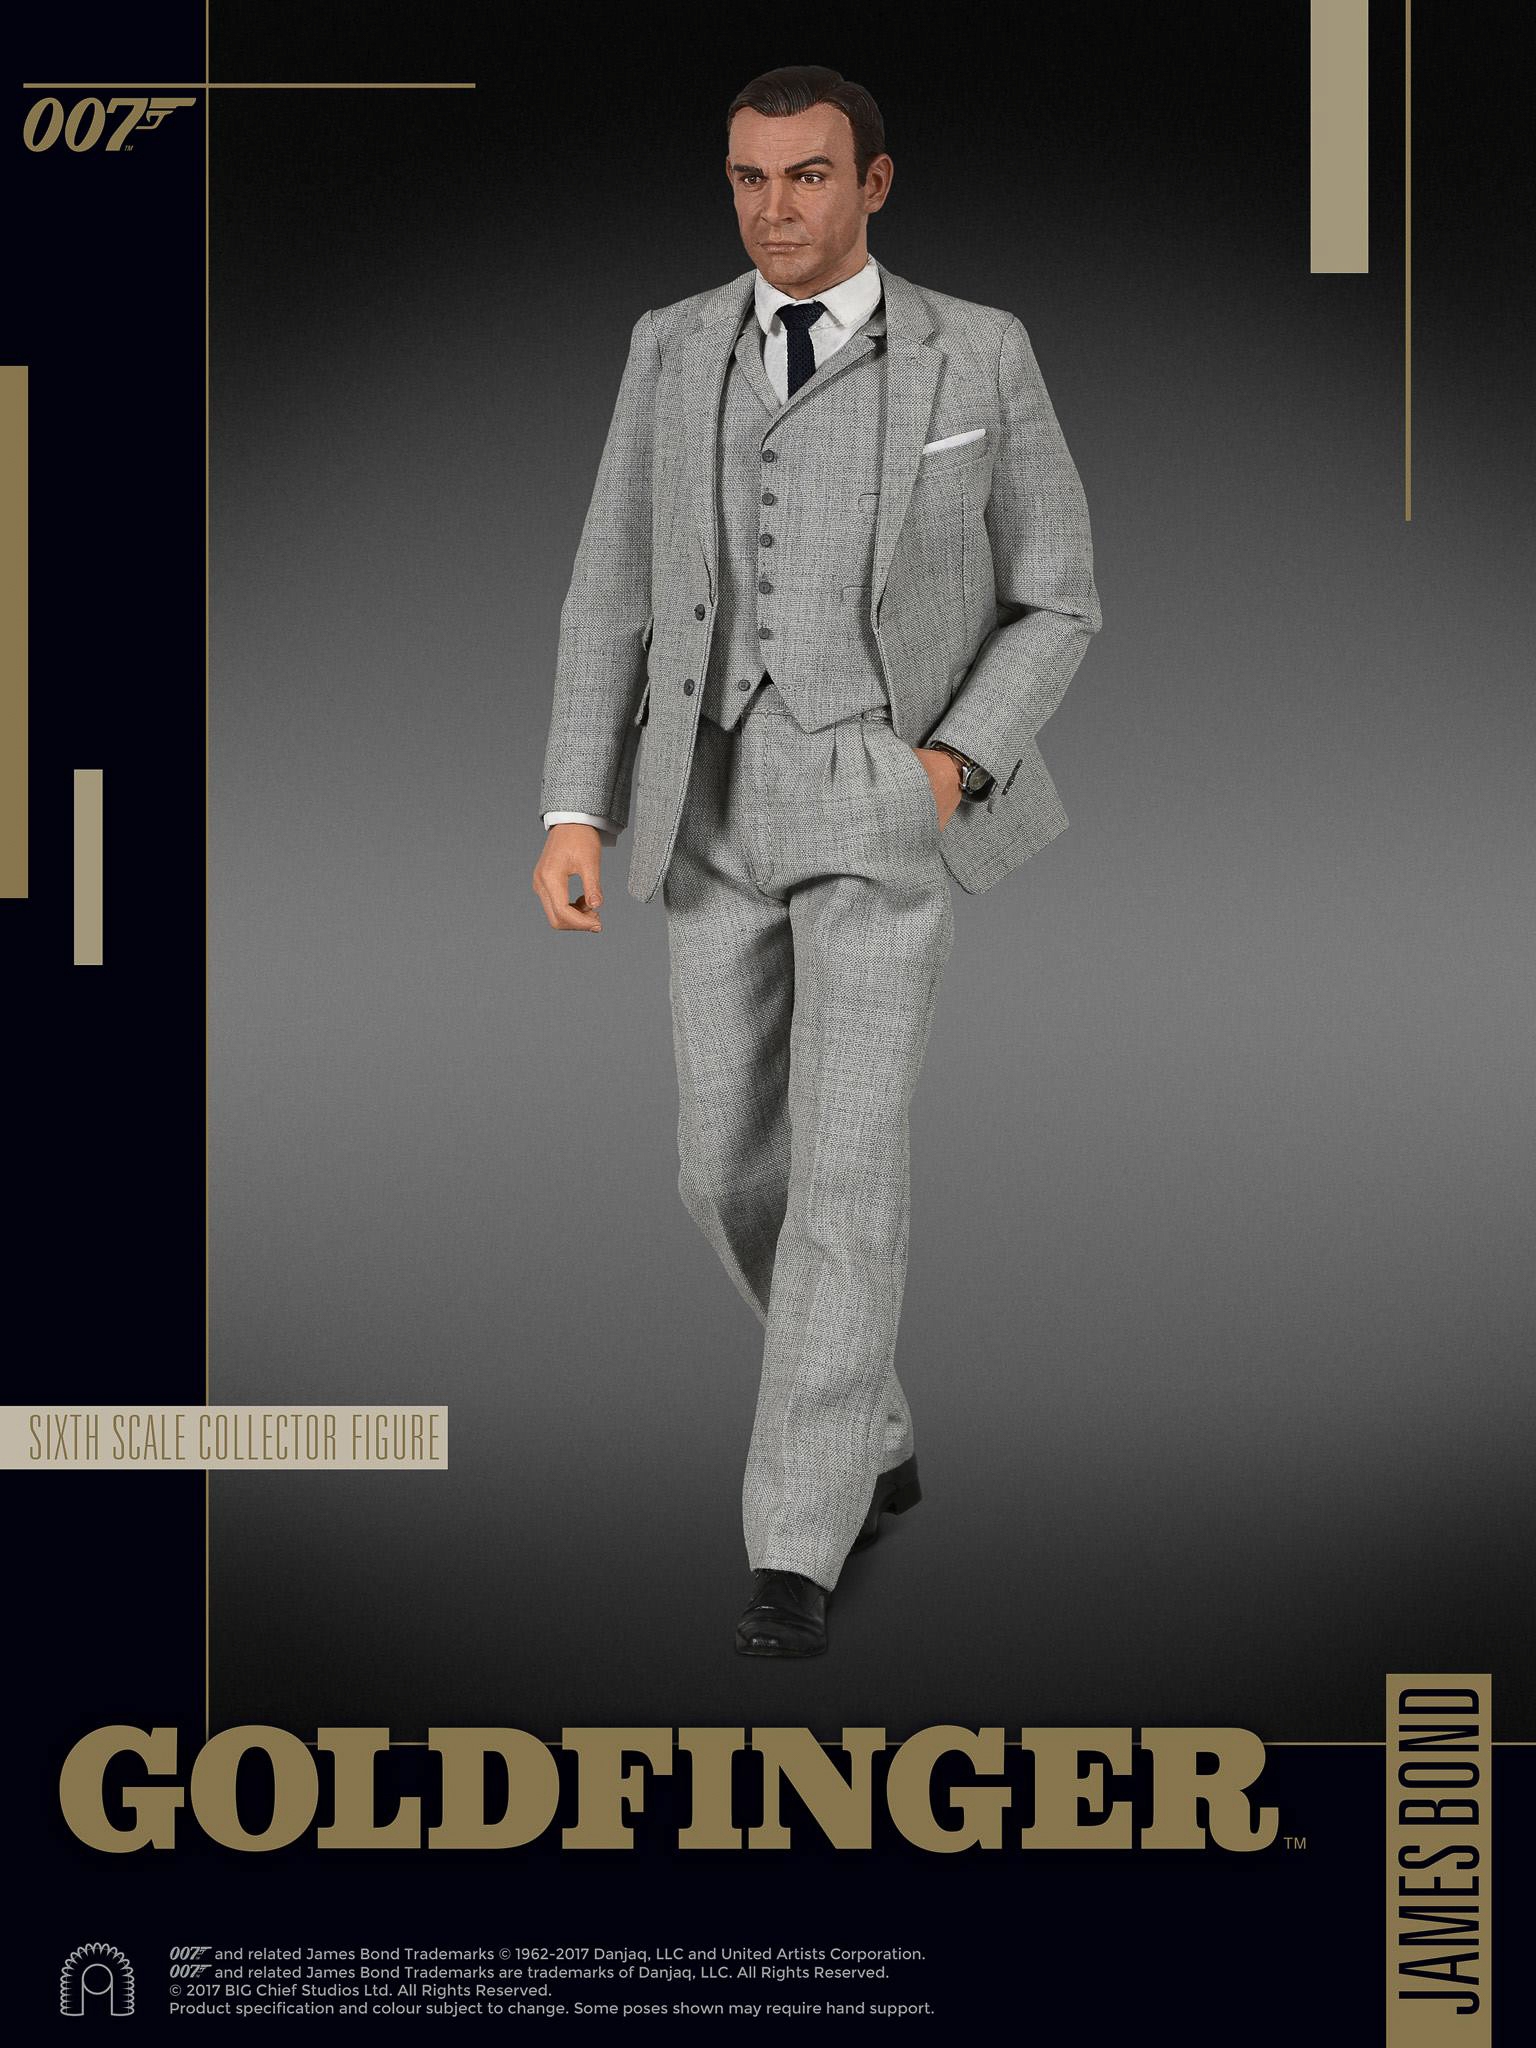 Big-Chief-James-Bond-Goldfinger-Oddjob-Full-Reveal-005.jpg